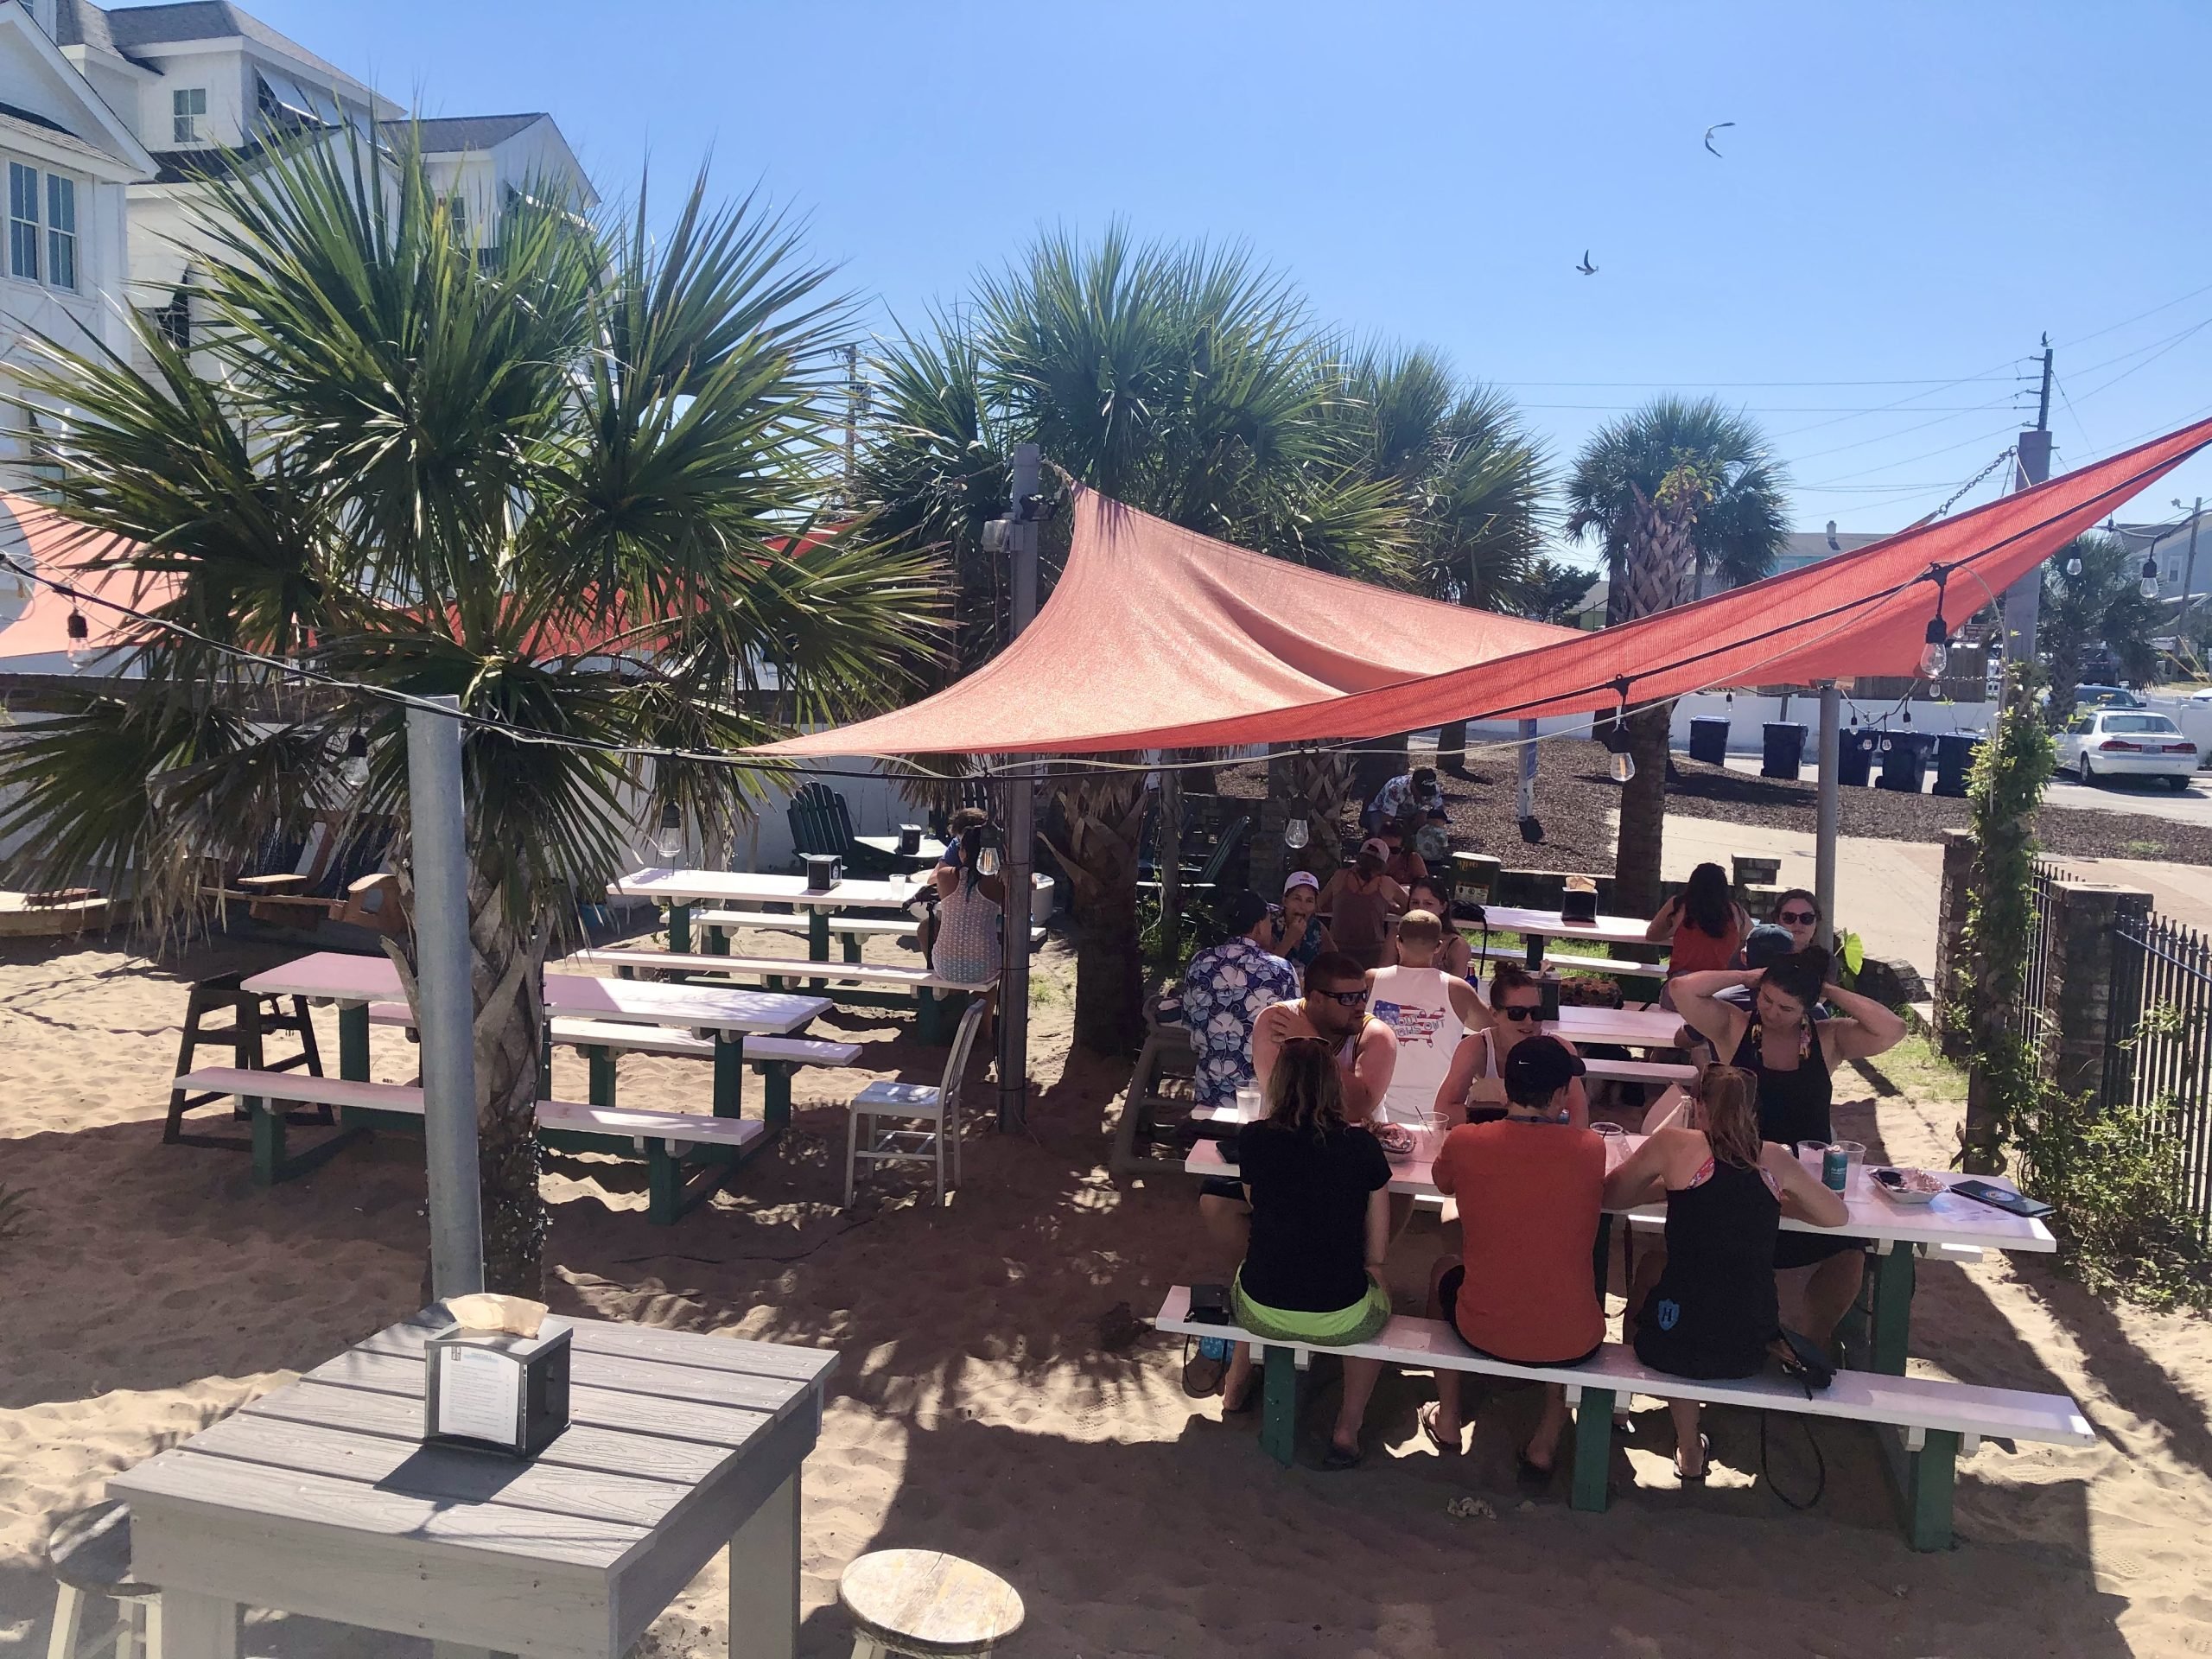 outdoor dining in atlantic beach nc at idle house biergarten, one of the best atlantic beach restaurants